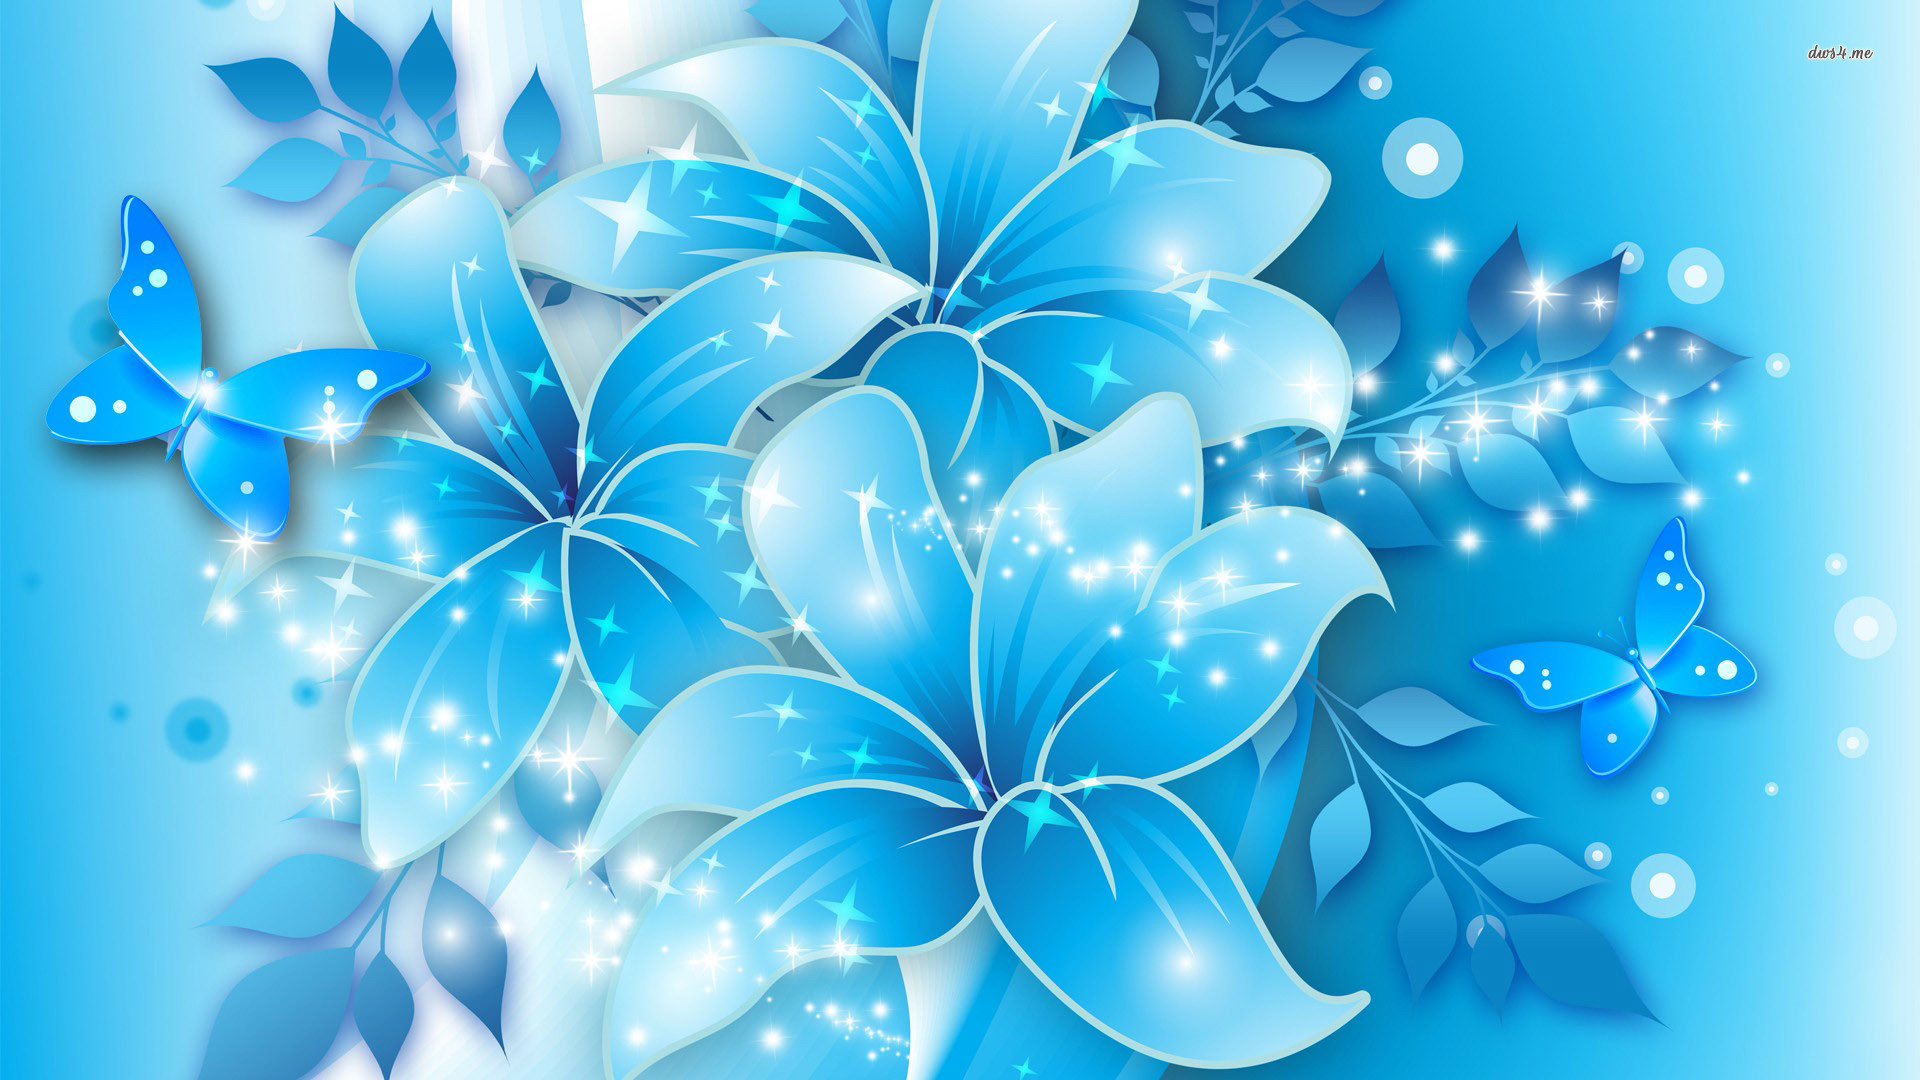 BLUE FLOWERS AND BUTTERFLIES WALLPAPER. Download